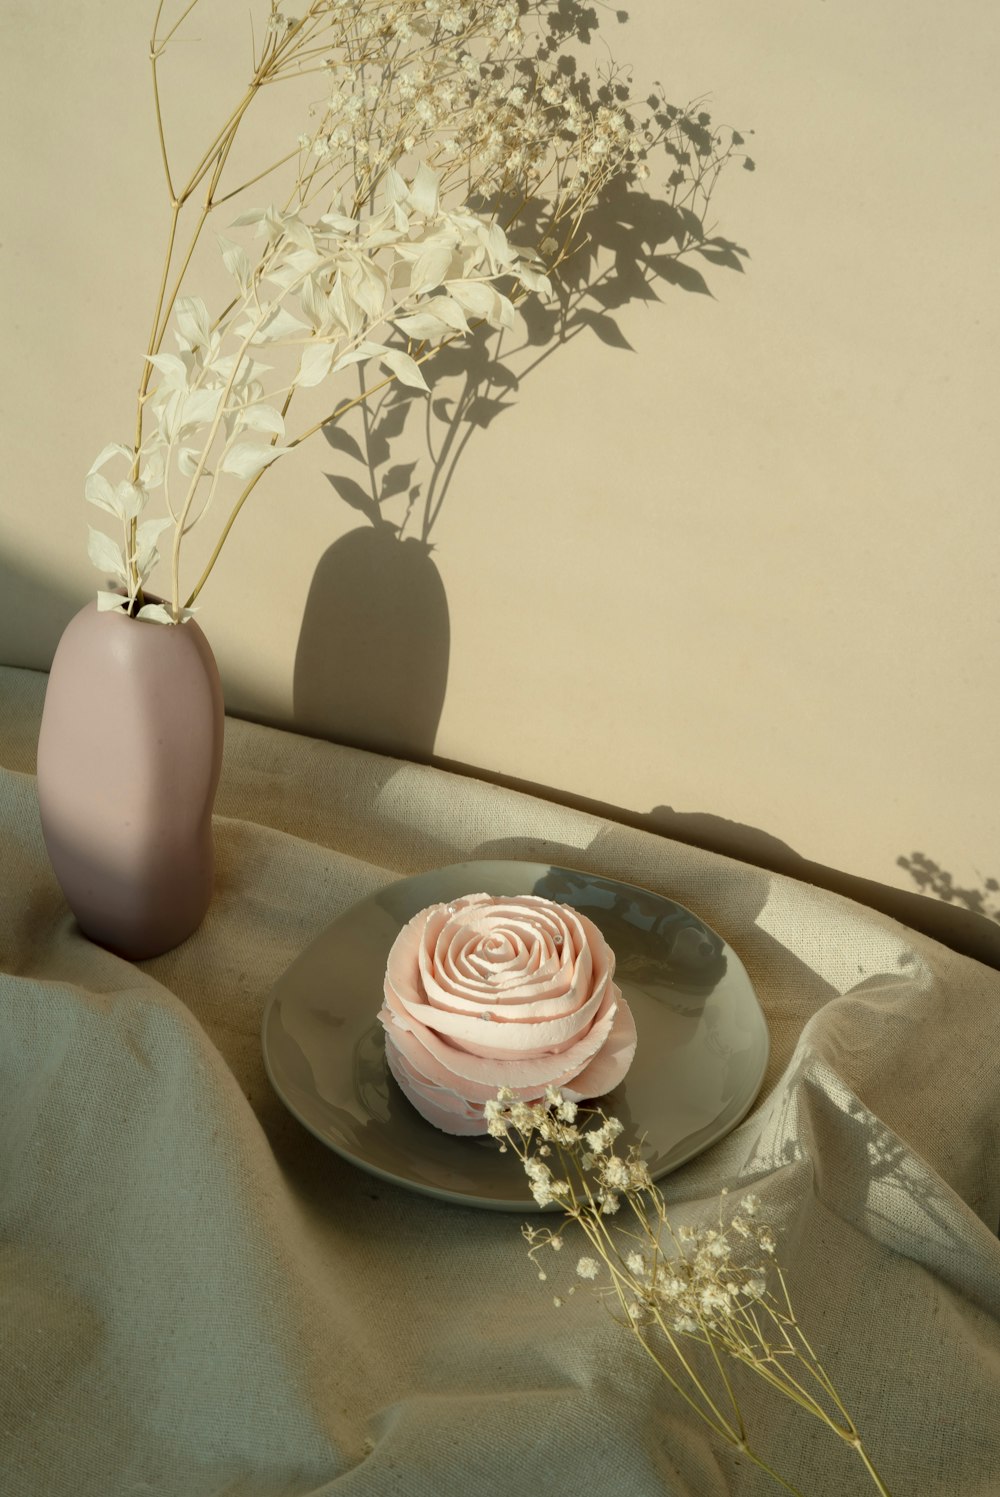 pink rose in brown ceramic vase on brown wooden table